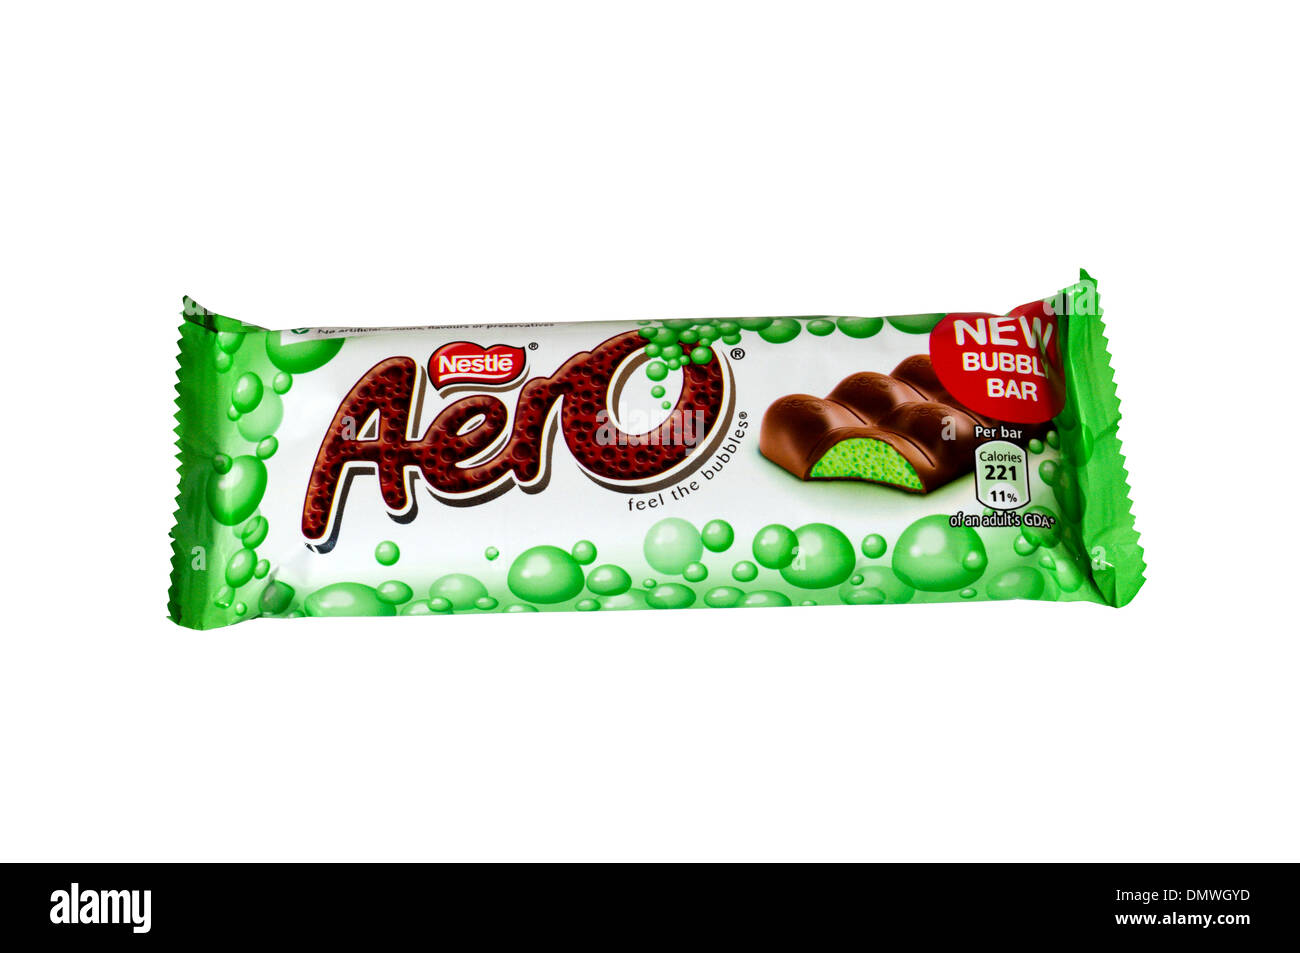 Aero chocolate bar, made by Nestlé. Stock Photo